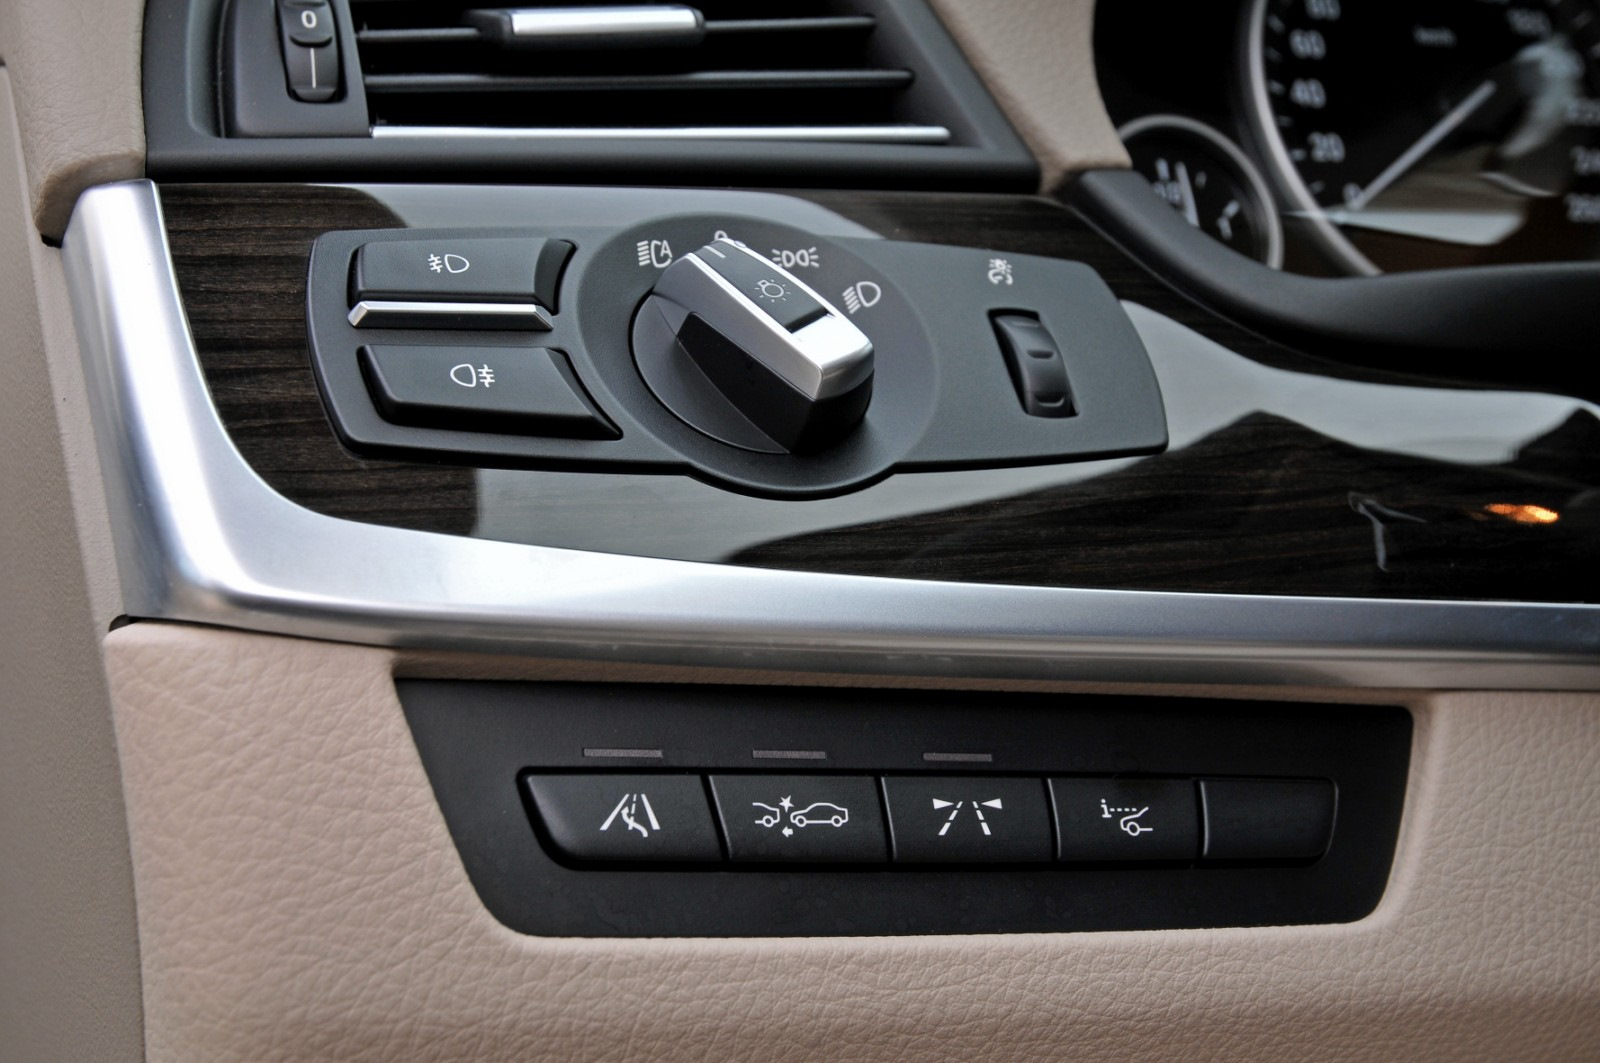 Ассистенты bmw. Кнопки проекции BMW f10. Кнопка ассистент BMW f25. BMW f10 ассистенты кнопки. Кнопки на панели управления BMW f30.